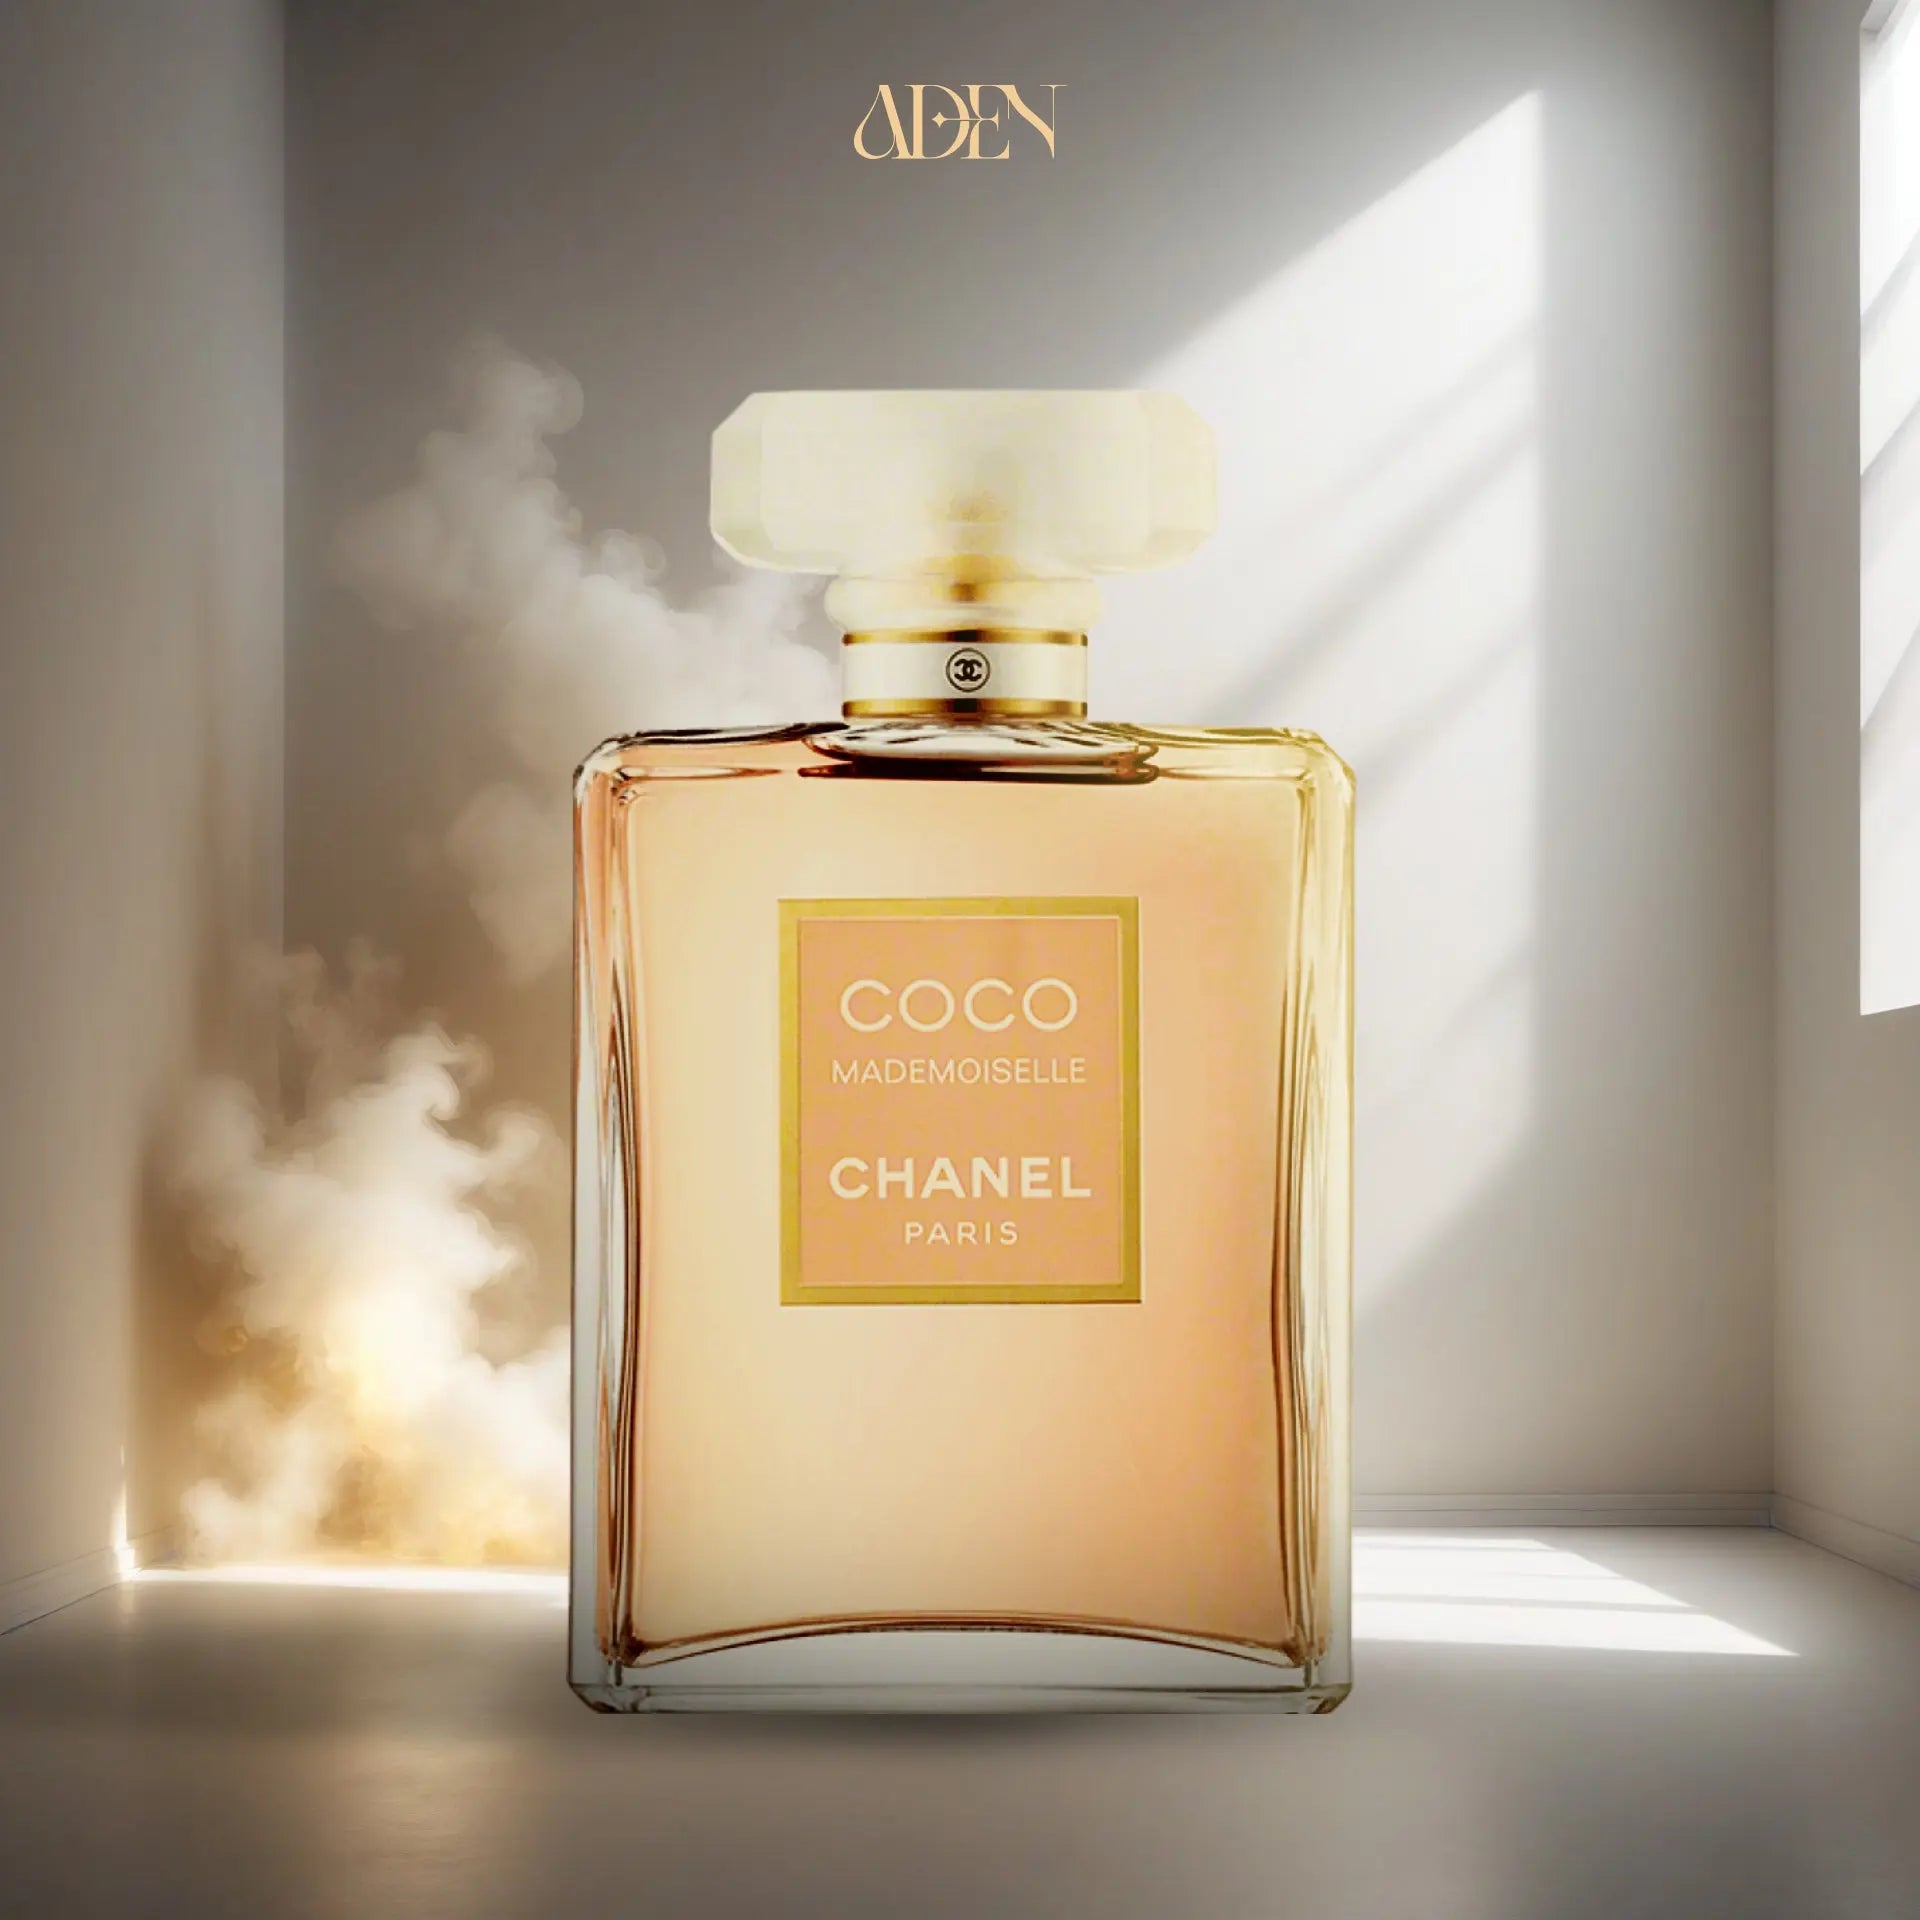 Coco Mademoiselle By Chanel Eau de Parfum For Women 100ML  كوكو مادموزيل من شانيل او دى بارفان للنساء 100 مل Perfume Home